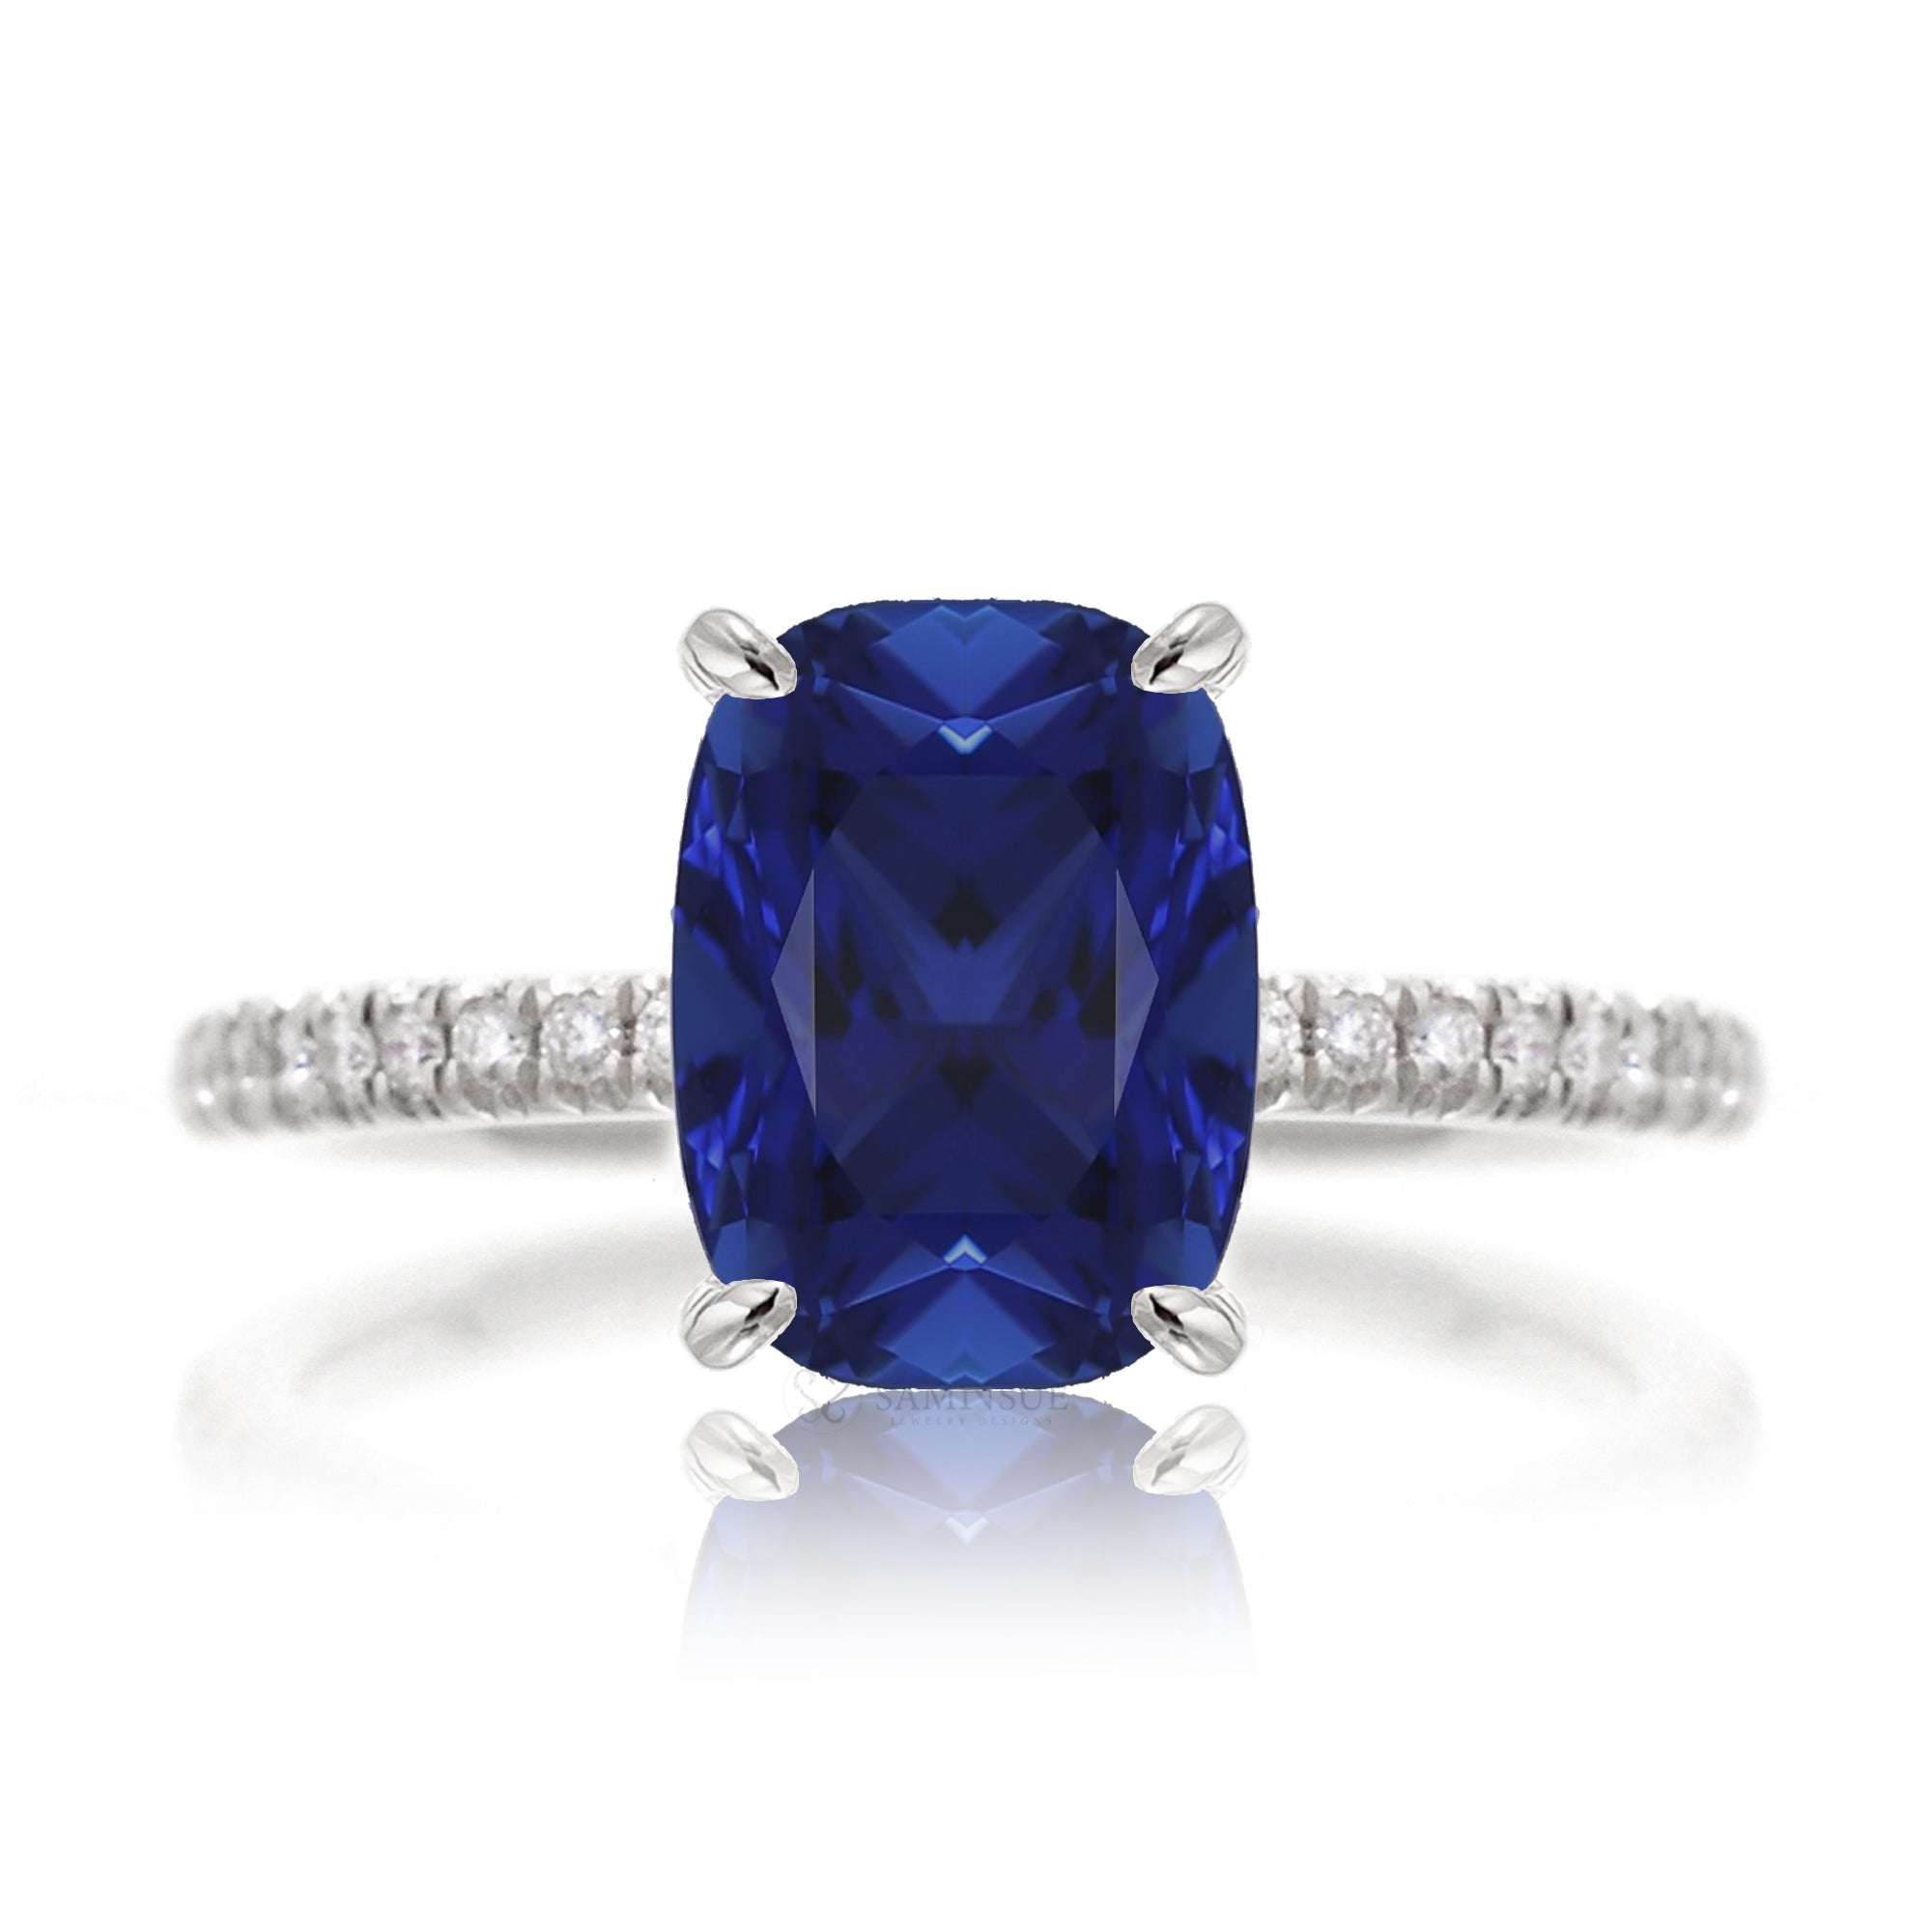 Cushion cut blue sapphire diamond engagement ring white gold - the Ava